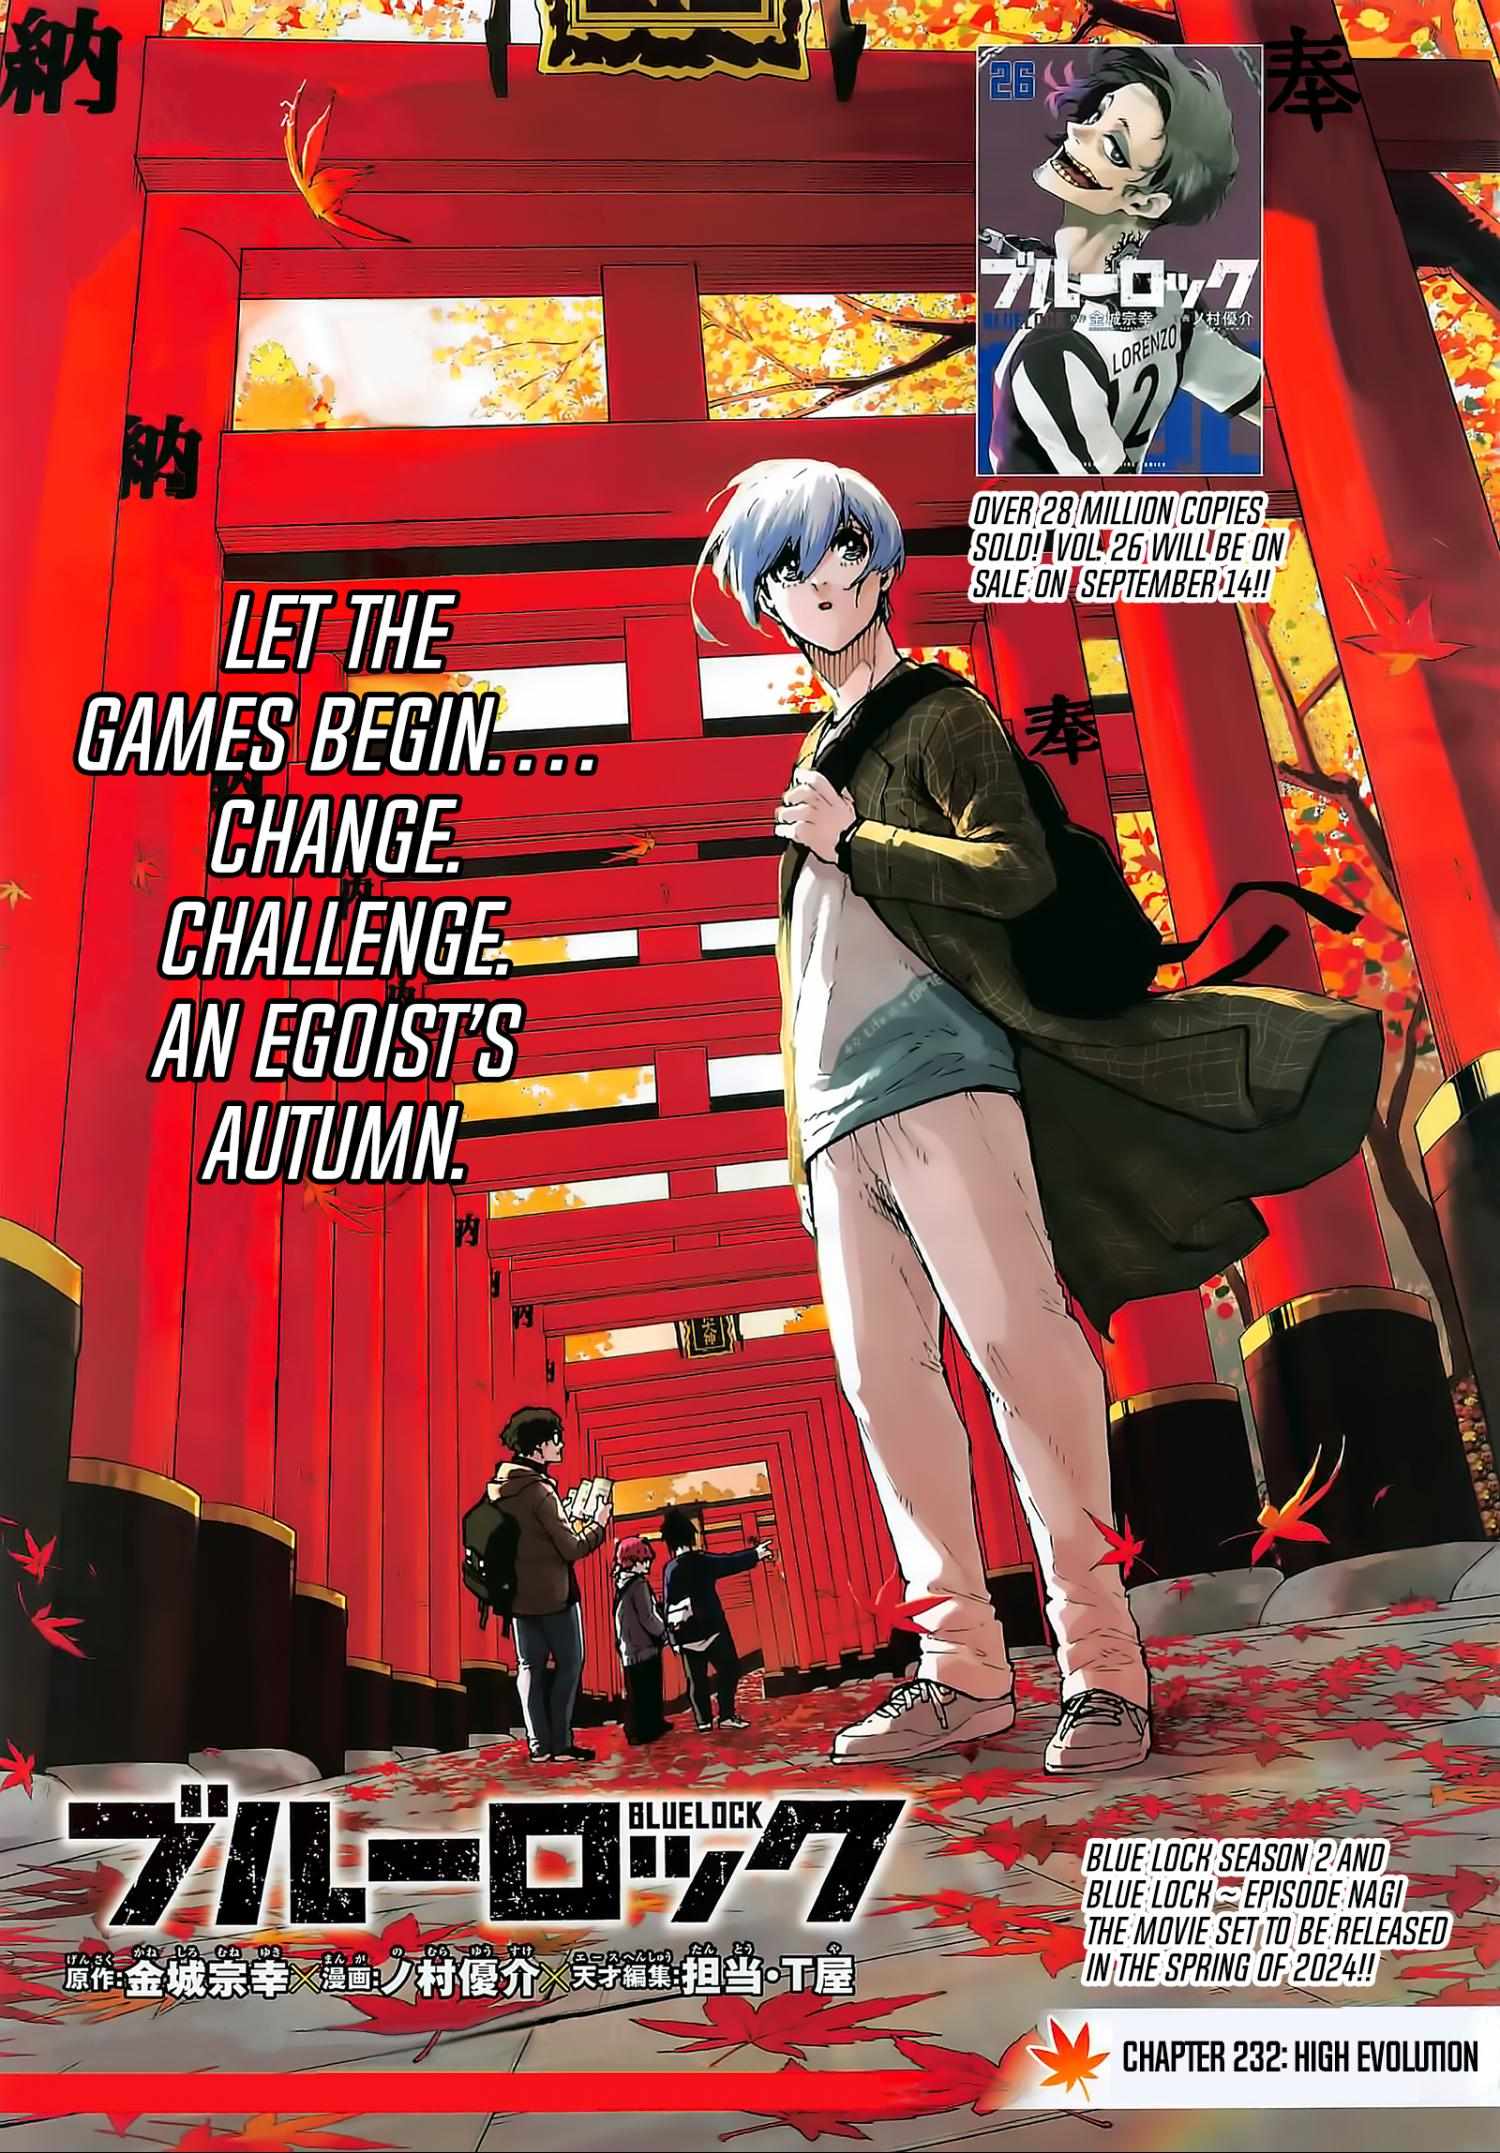 Read Blue Lock Manga Chapter 125 in English Free Online